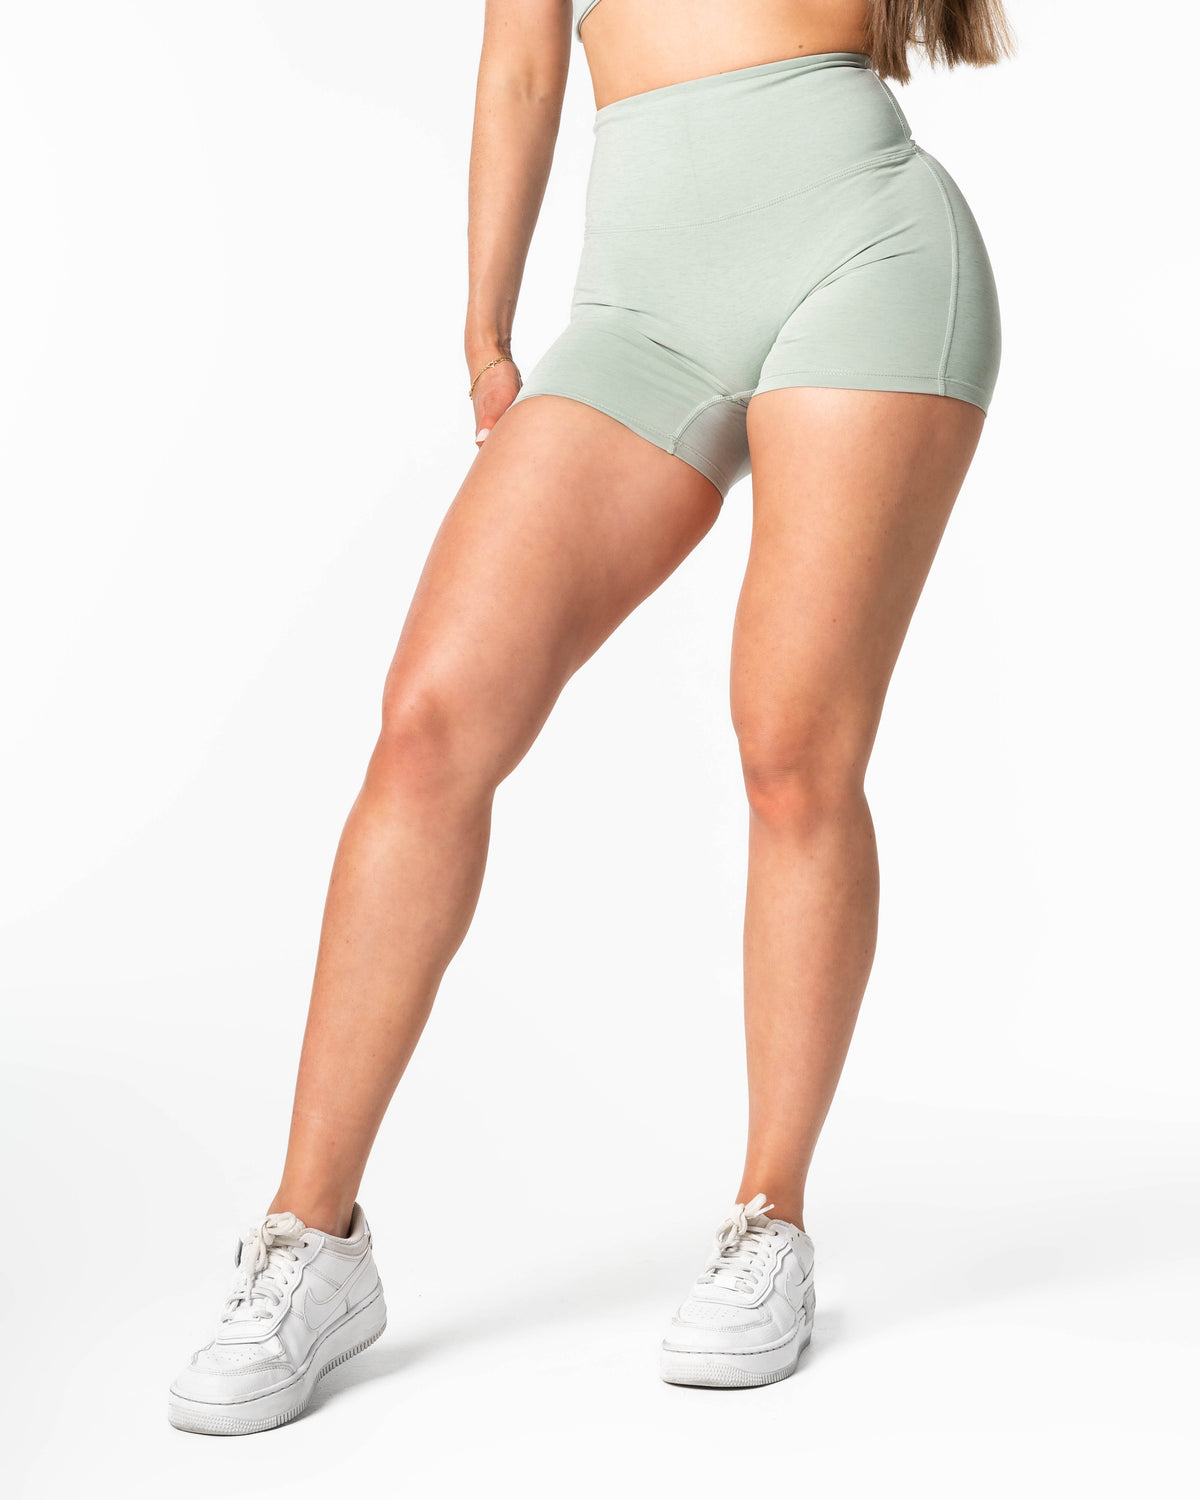 Women's training shorts Gymshark Apex Seamless Low Rise green/black 